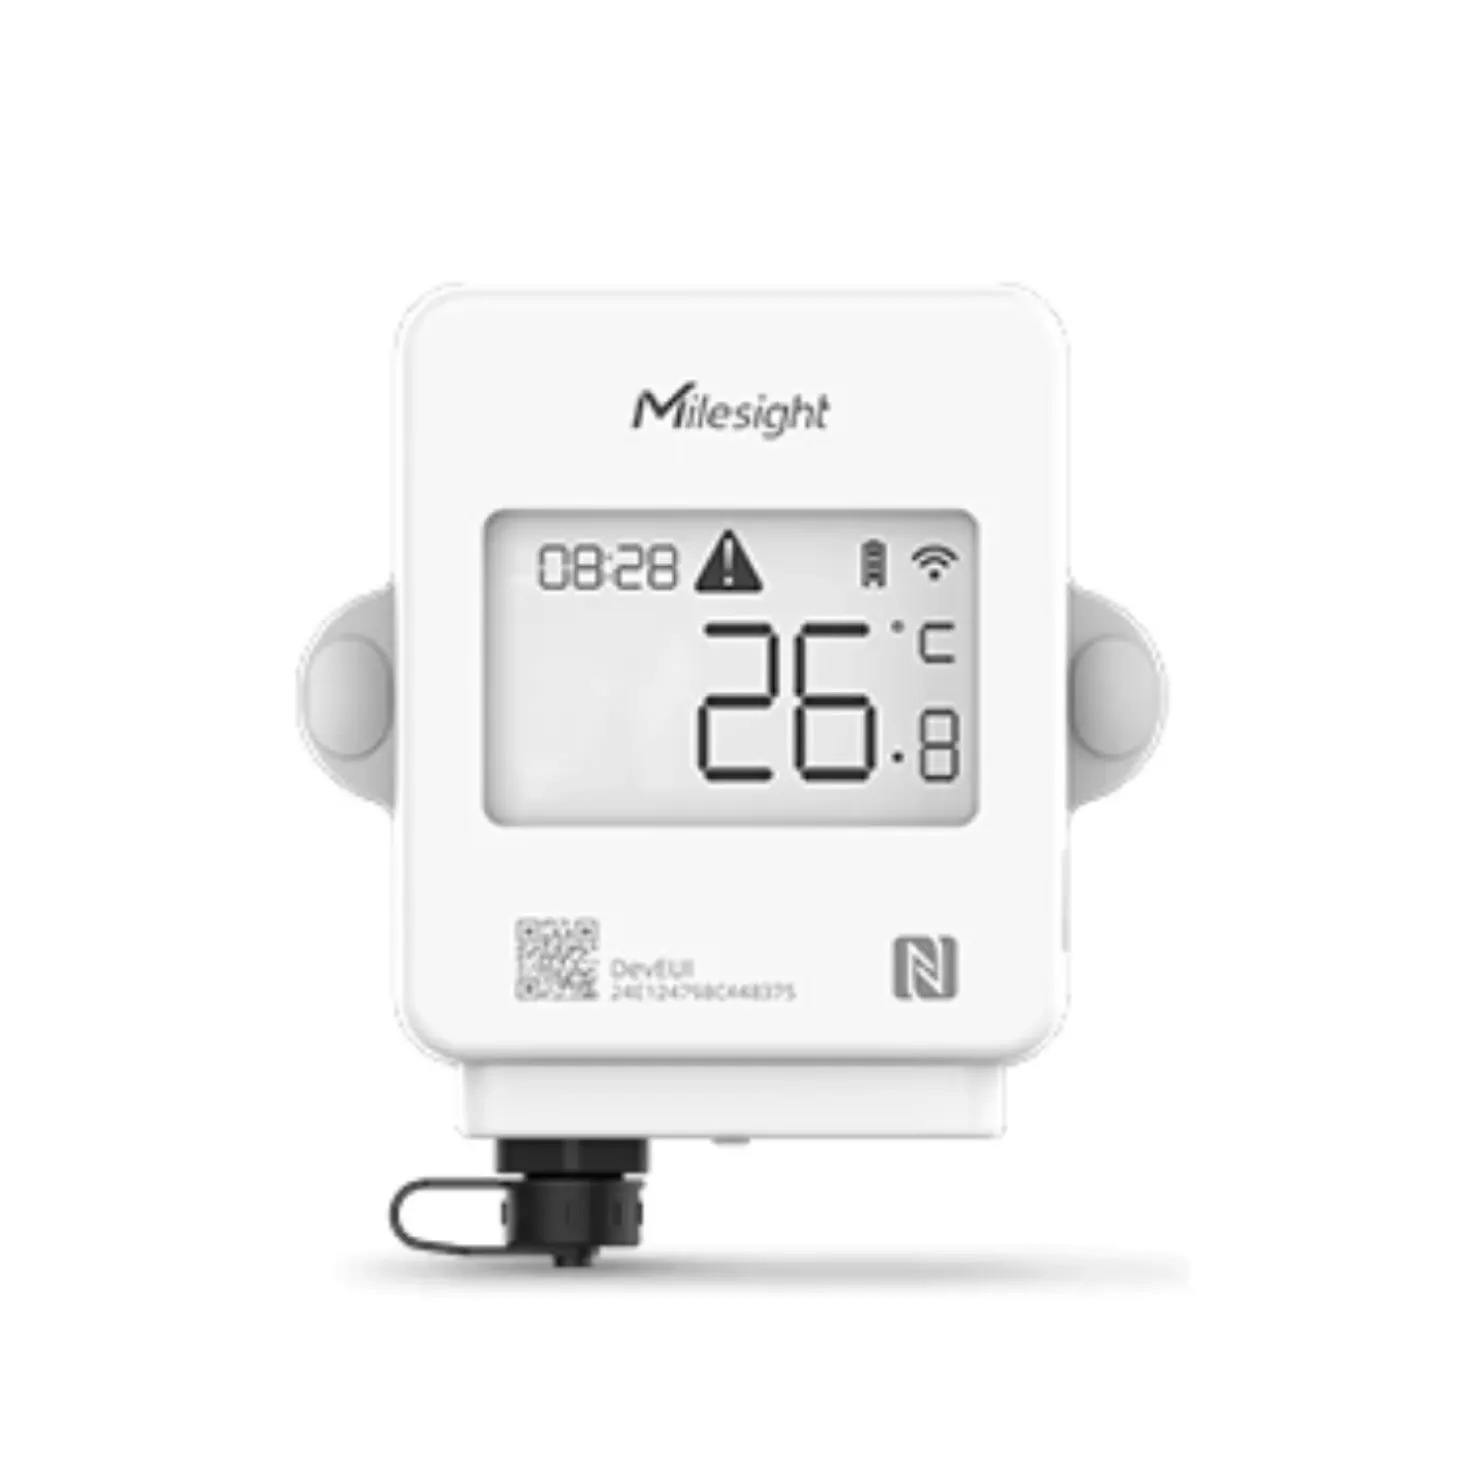 Standard Temperature Sensor with Display & Probe plus Subscription